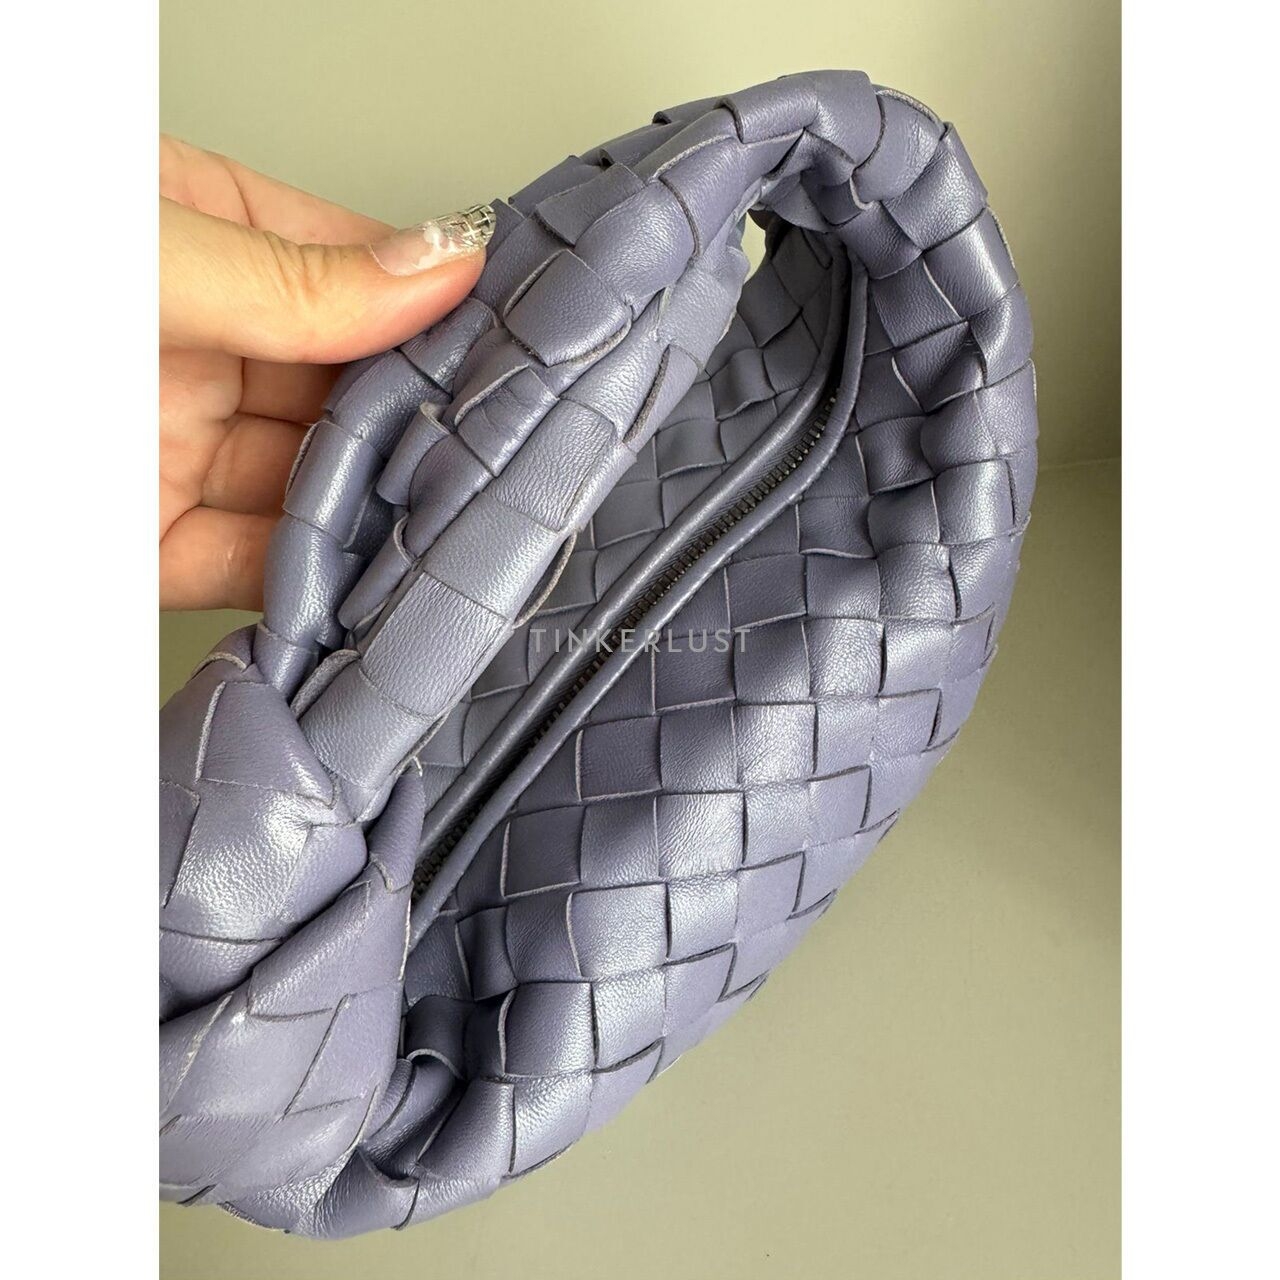 Bottega Veneta Mini Jodie Purple Leather Handbag